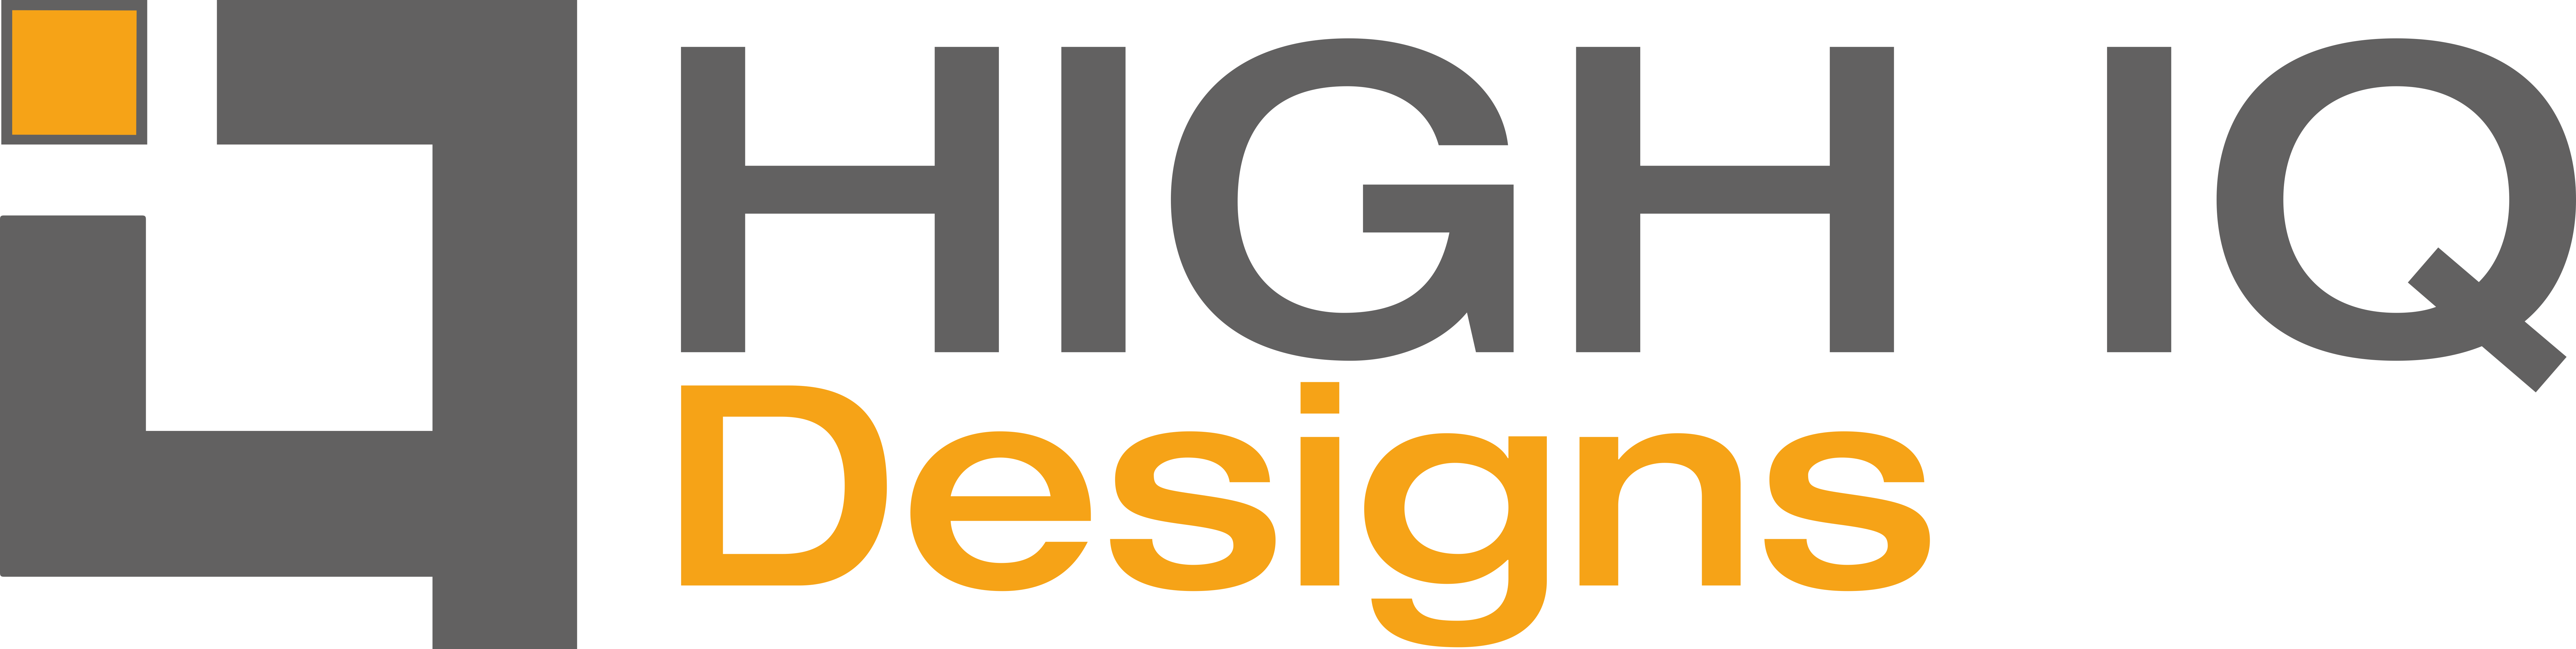 HighIQ Designs - 